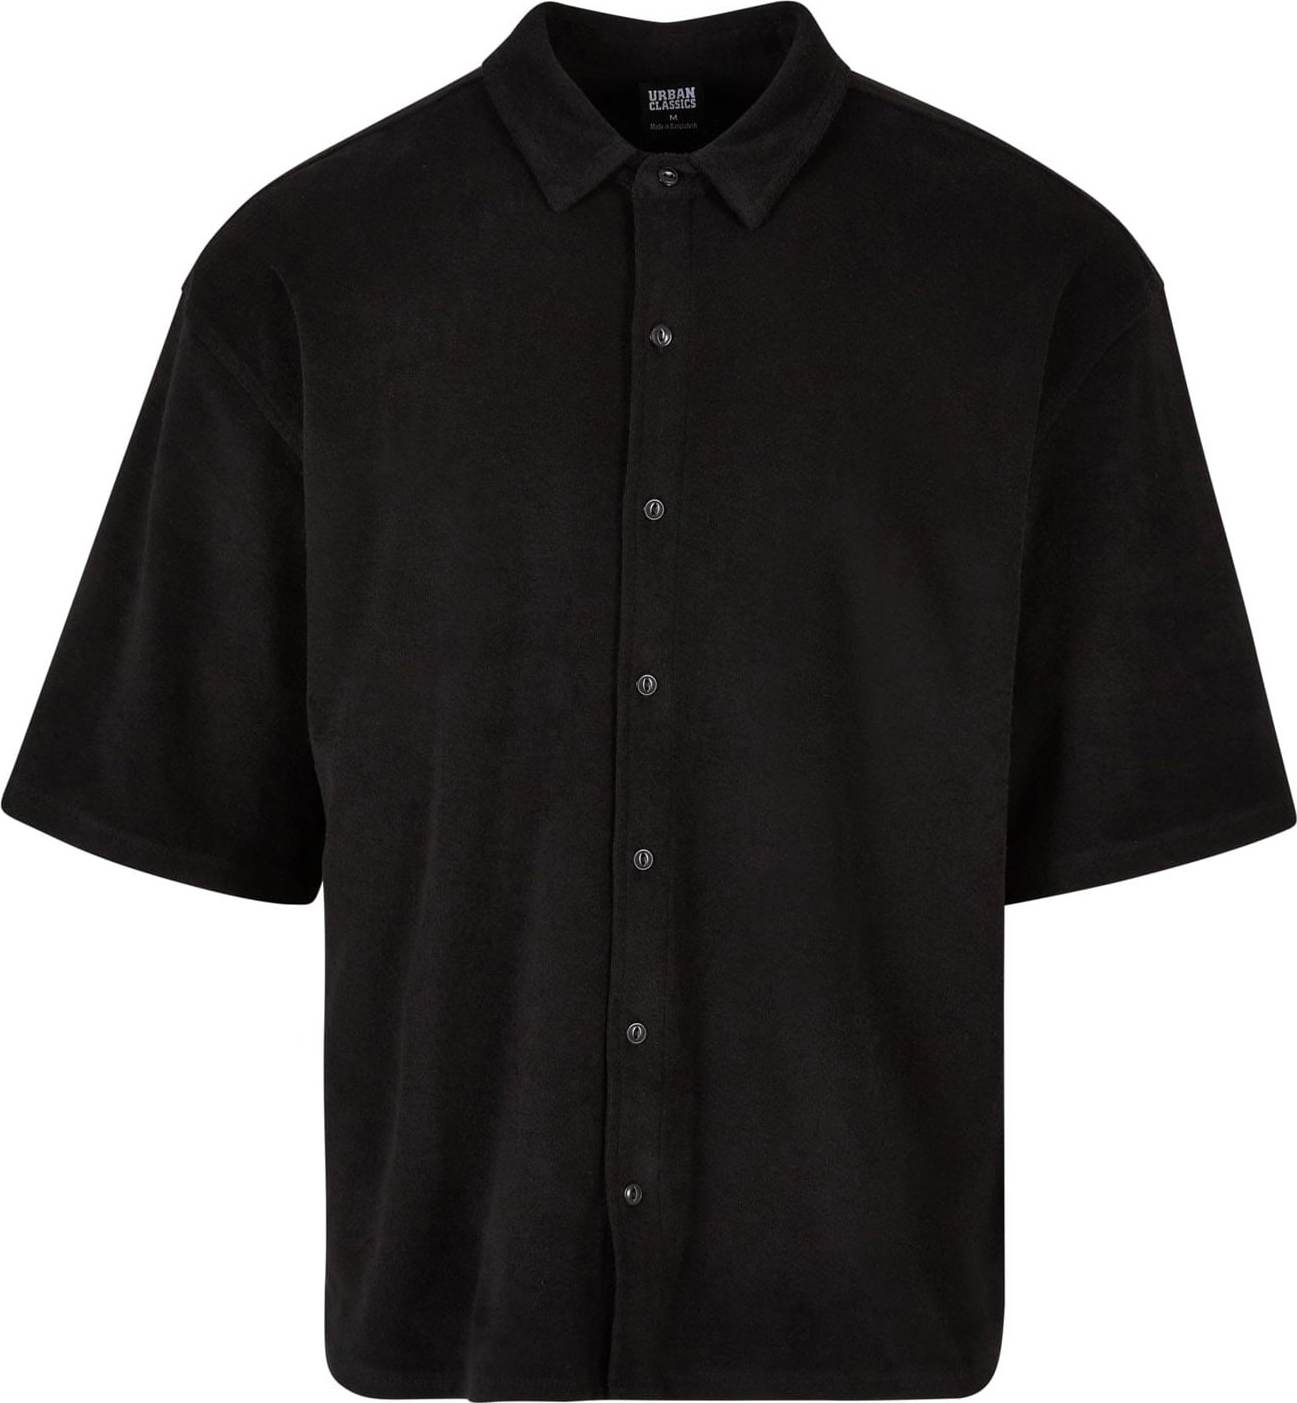 Košile Urban Classics černá